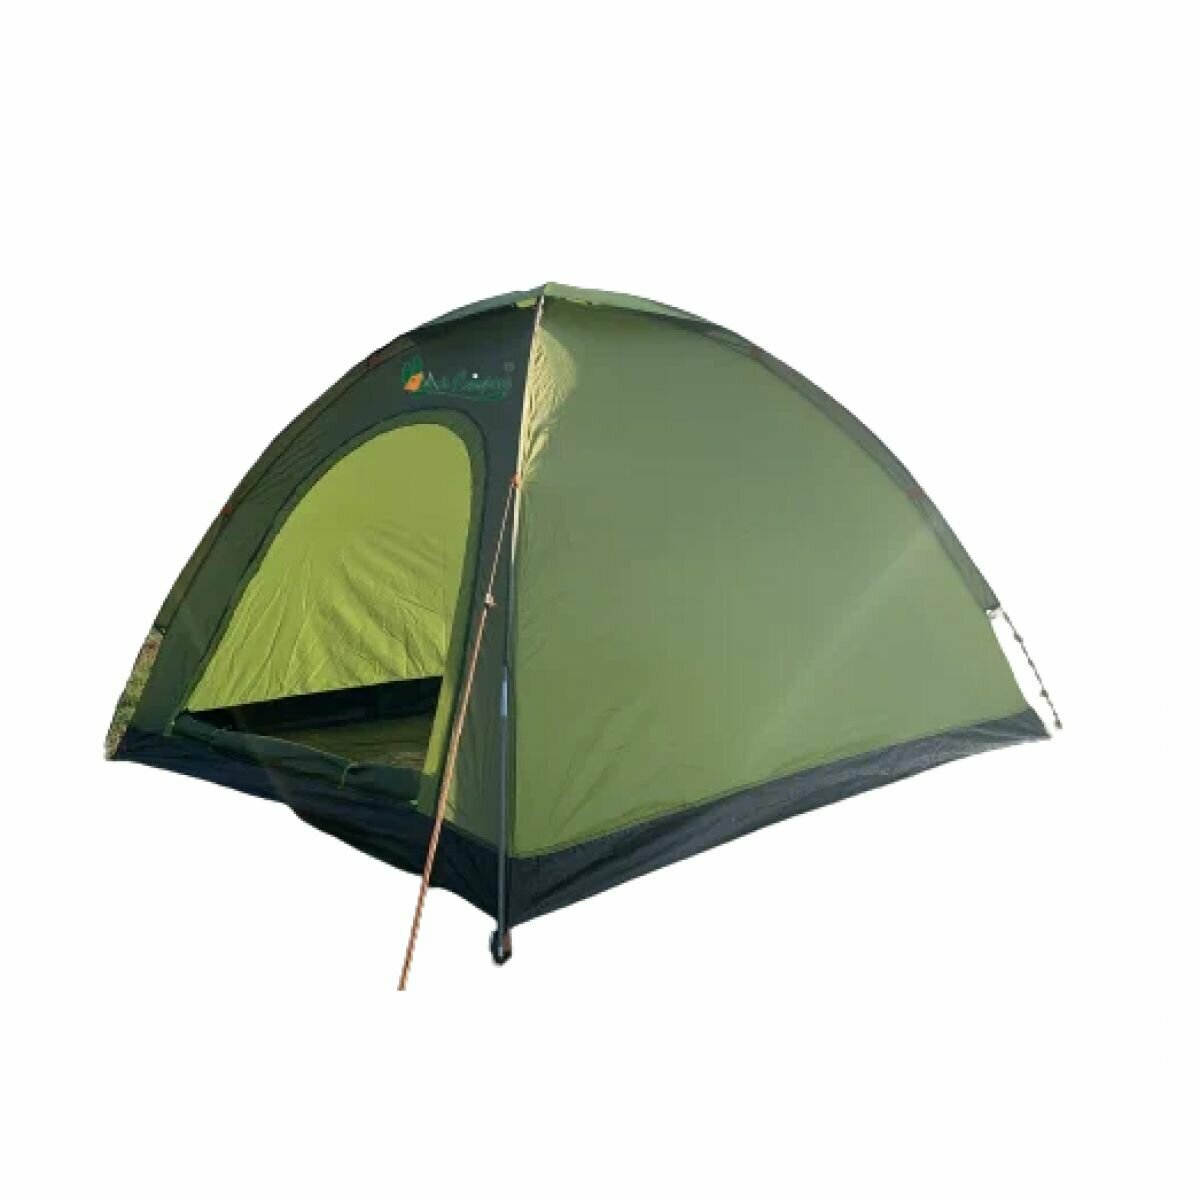 Палатка шатер 2-х местная ультралегкая быстросборная TERBO 1-012-2